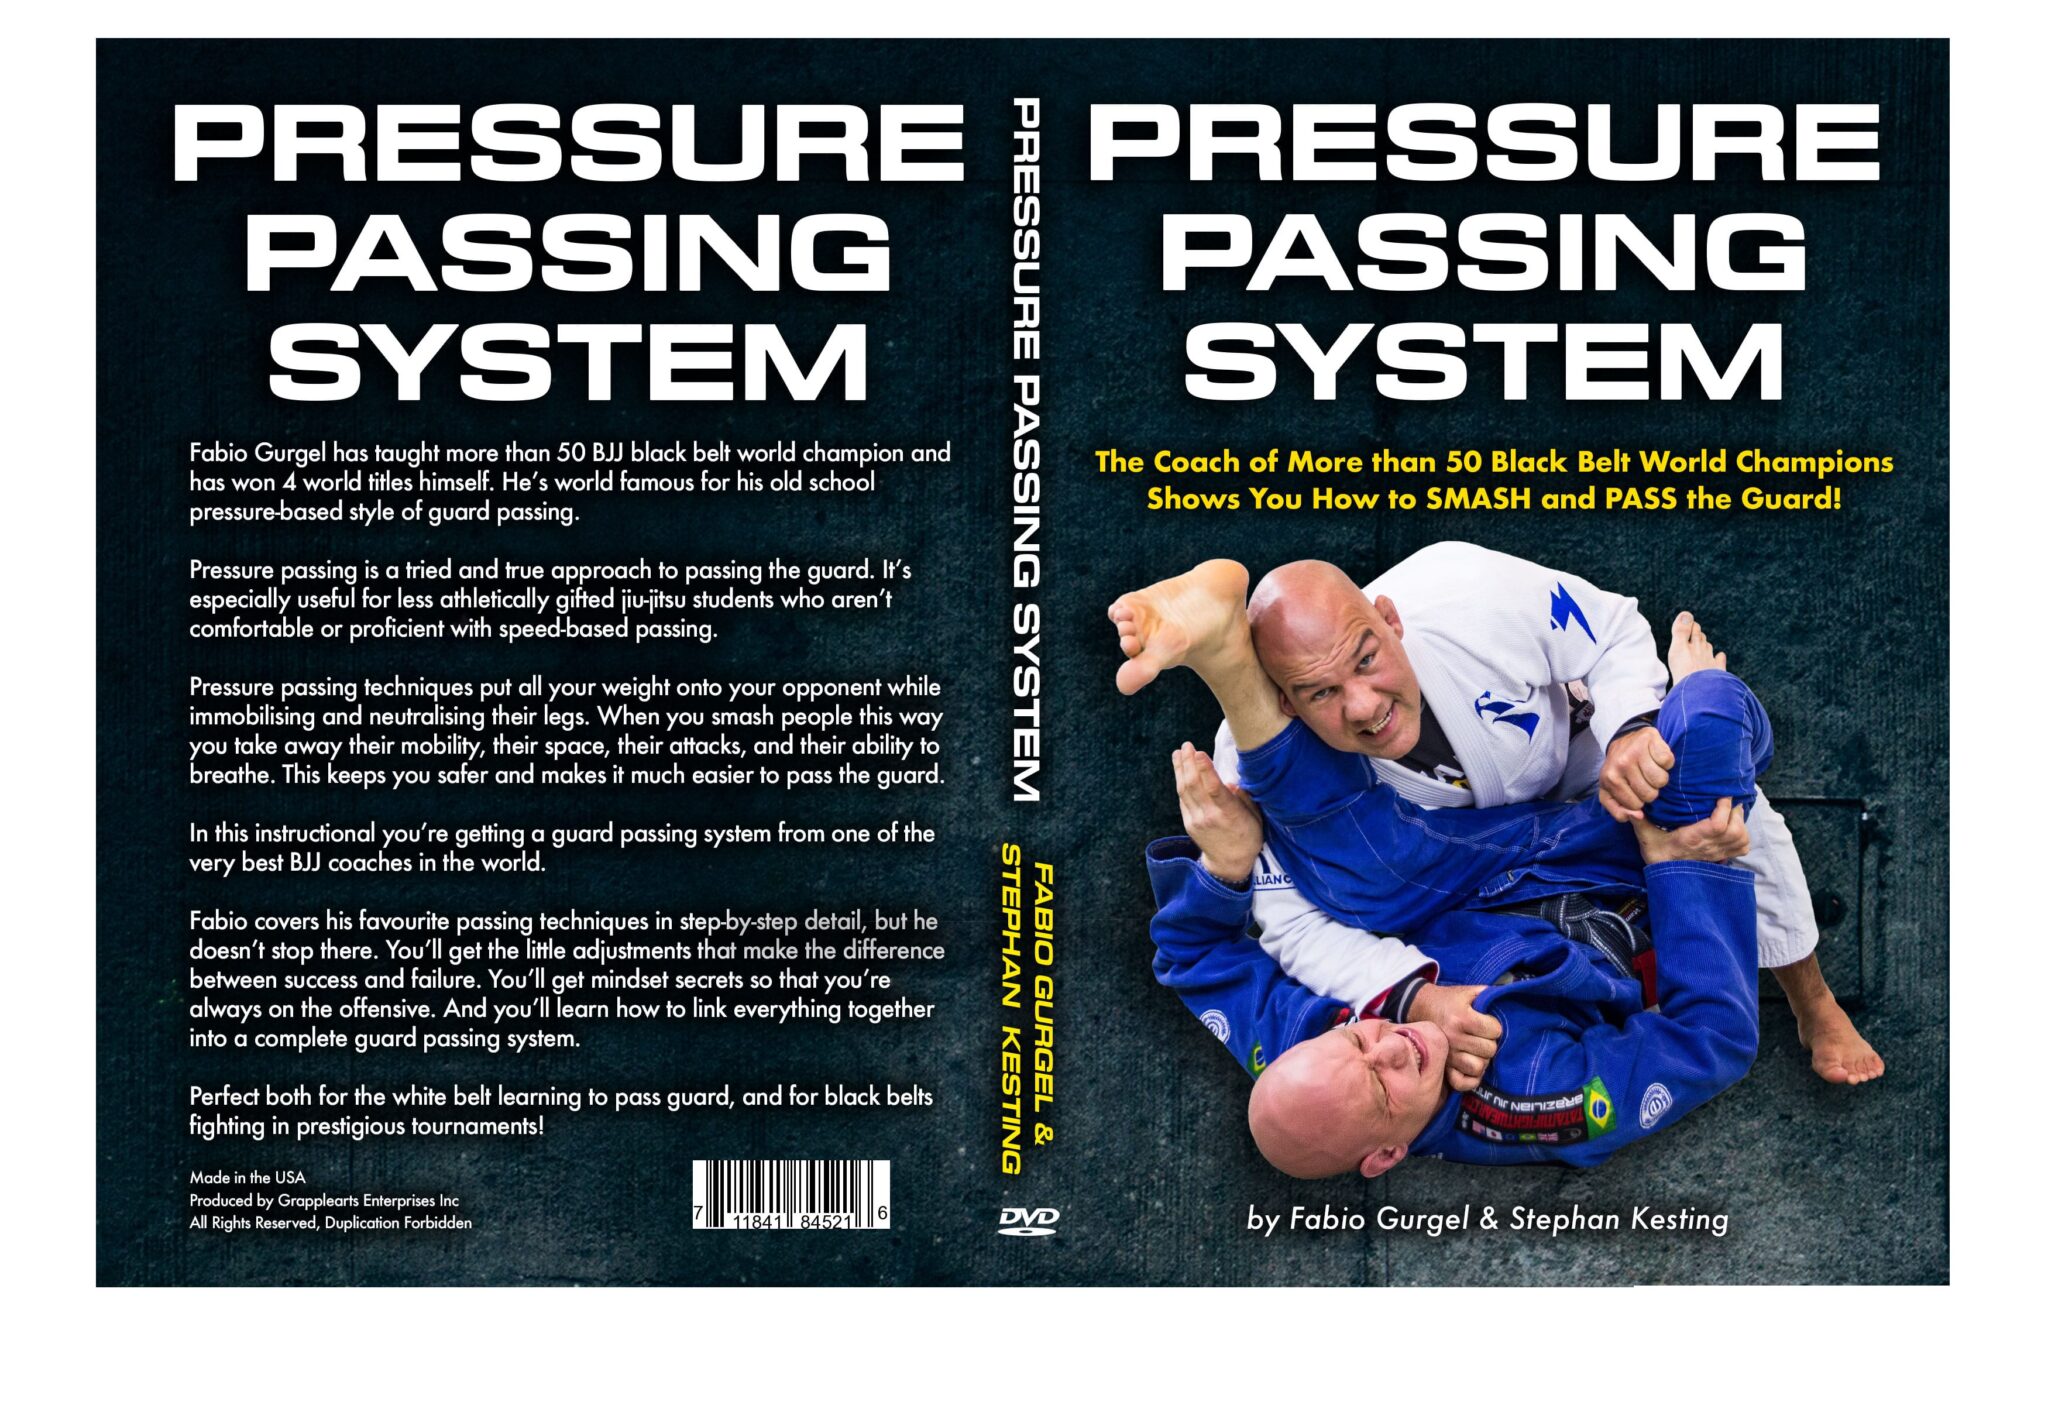 Pressure Passing System by Fabio Gurgel